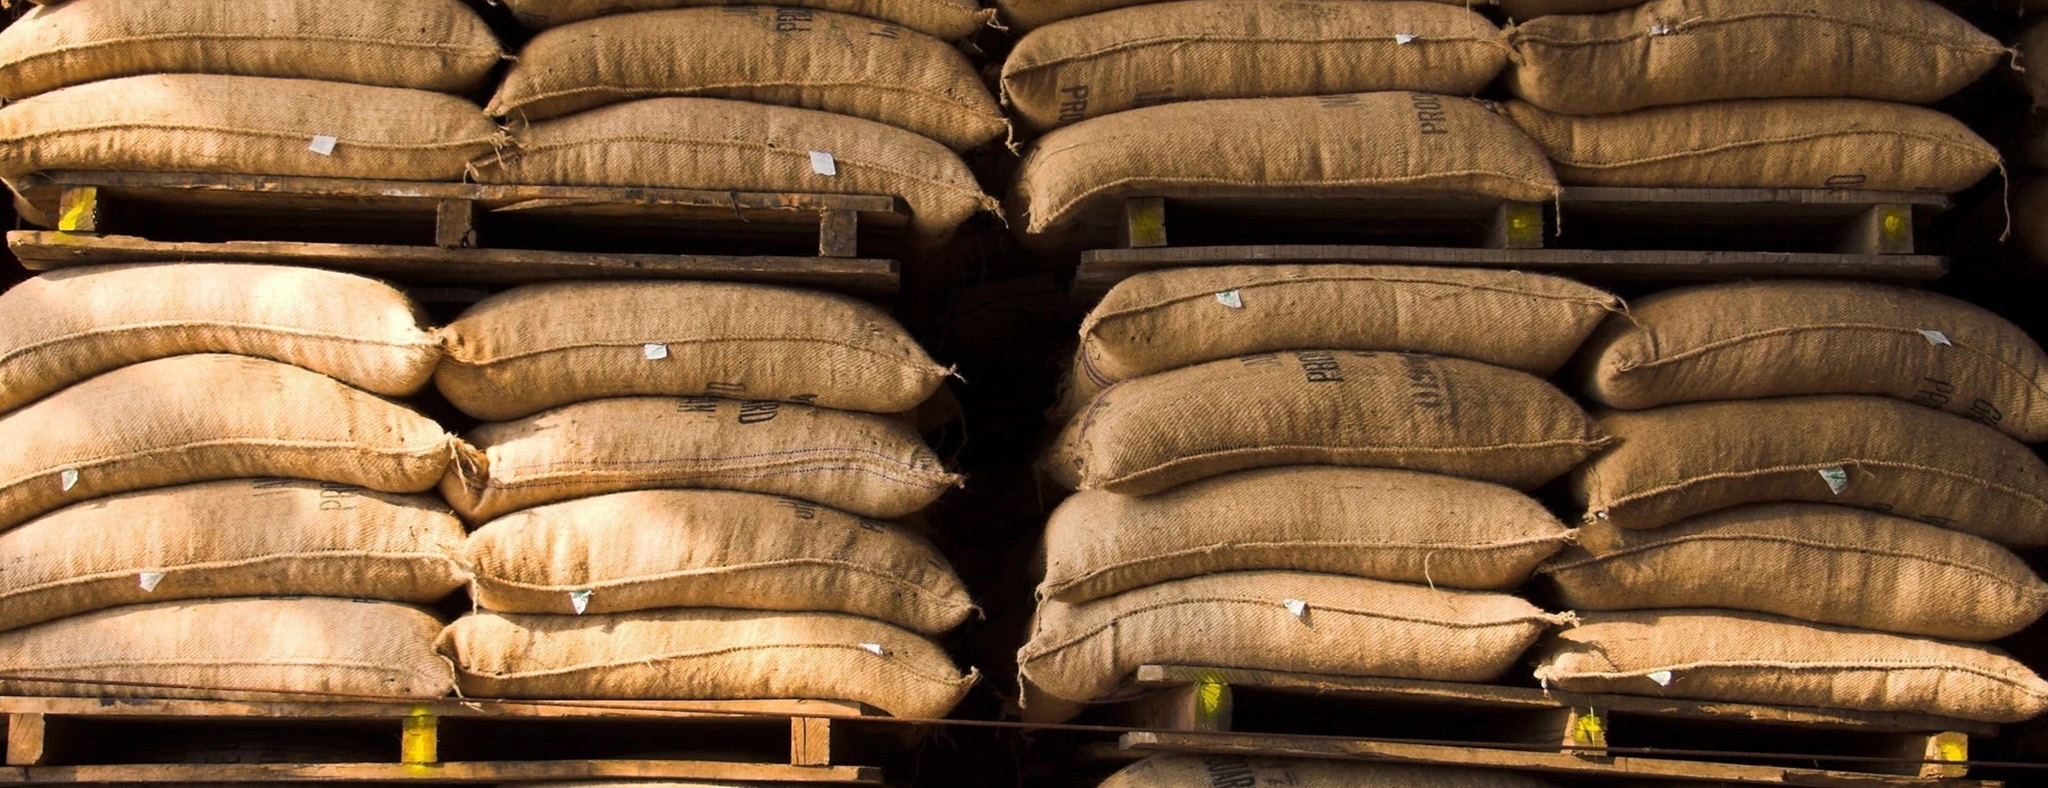 Wholesale coffee beans in bulk from Turkey